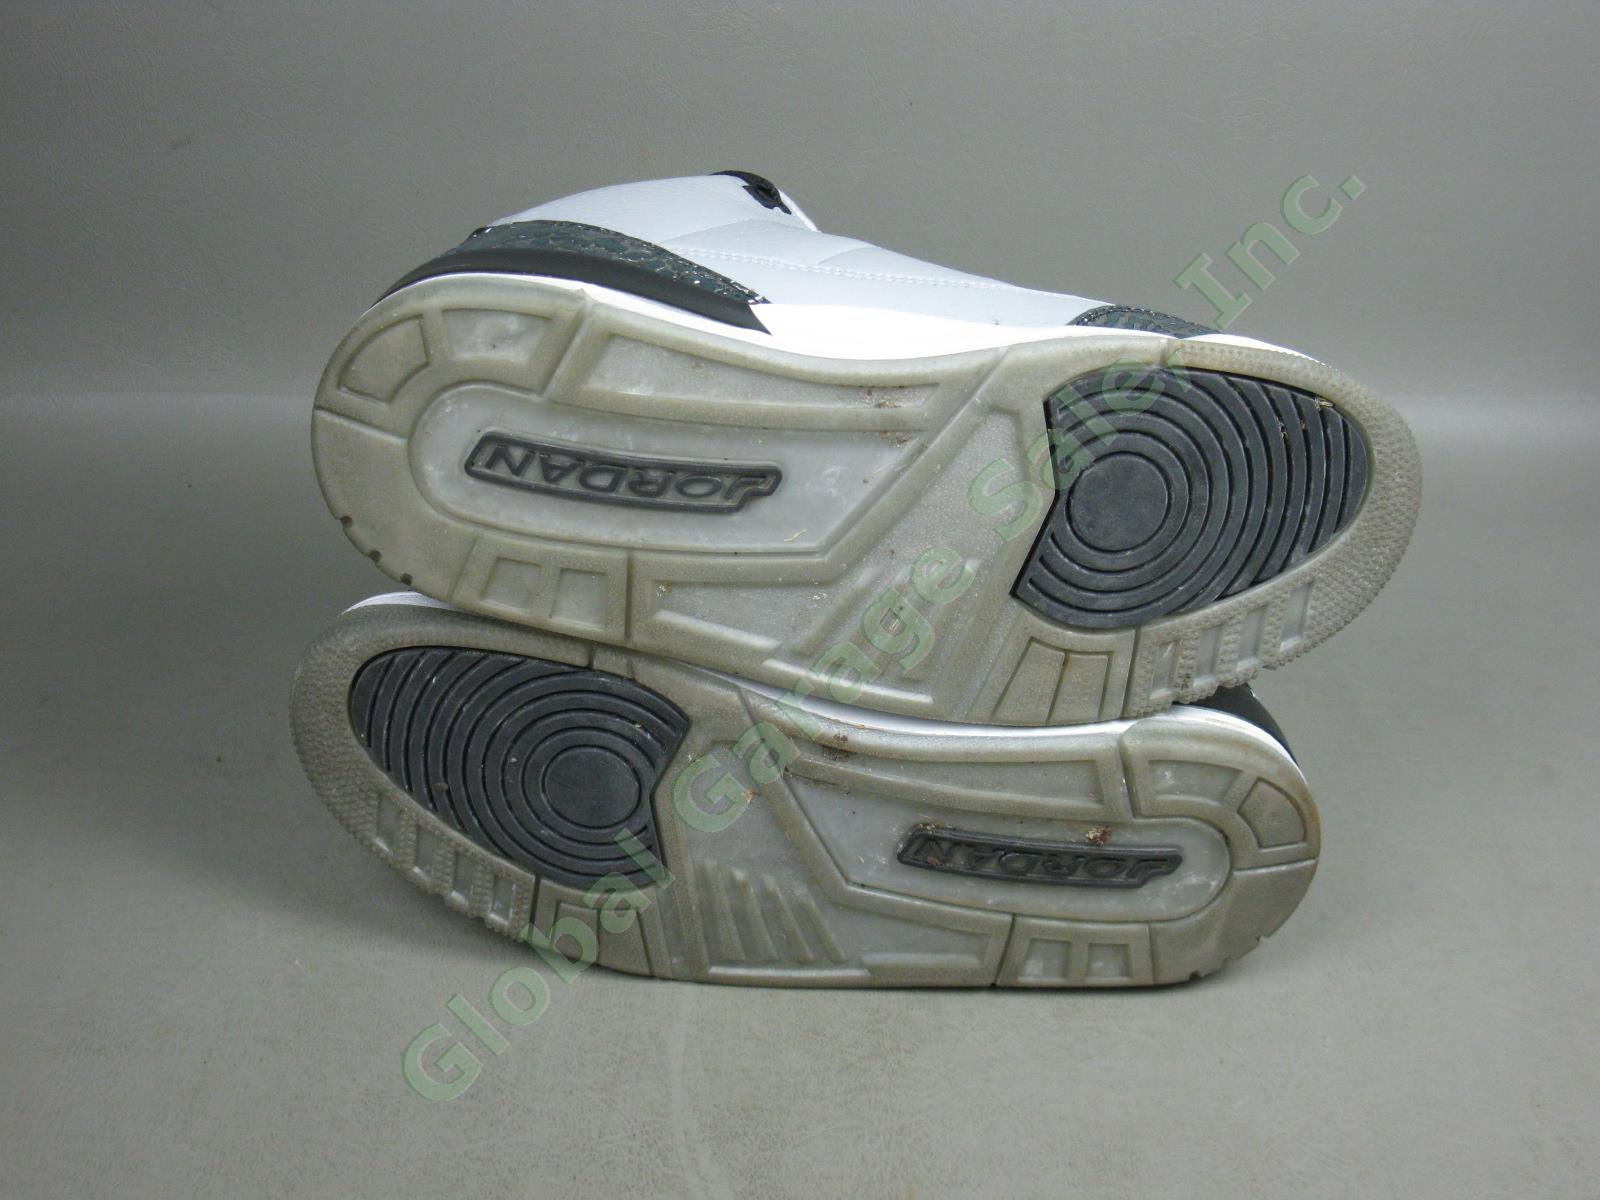 Nike Air Jordan 3 Retro Wolf Grey Basketball Shoes Size US 9 EUR 42.5 136064-004 6